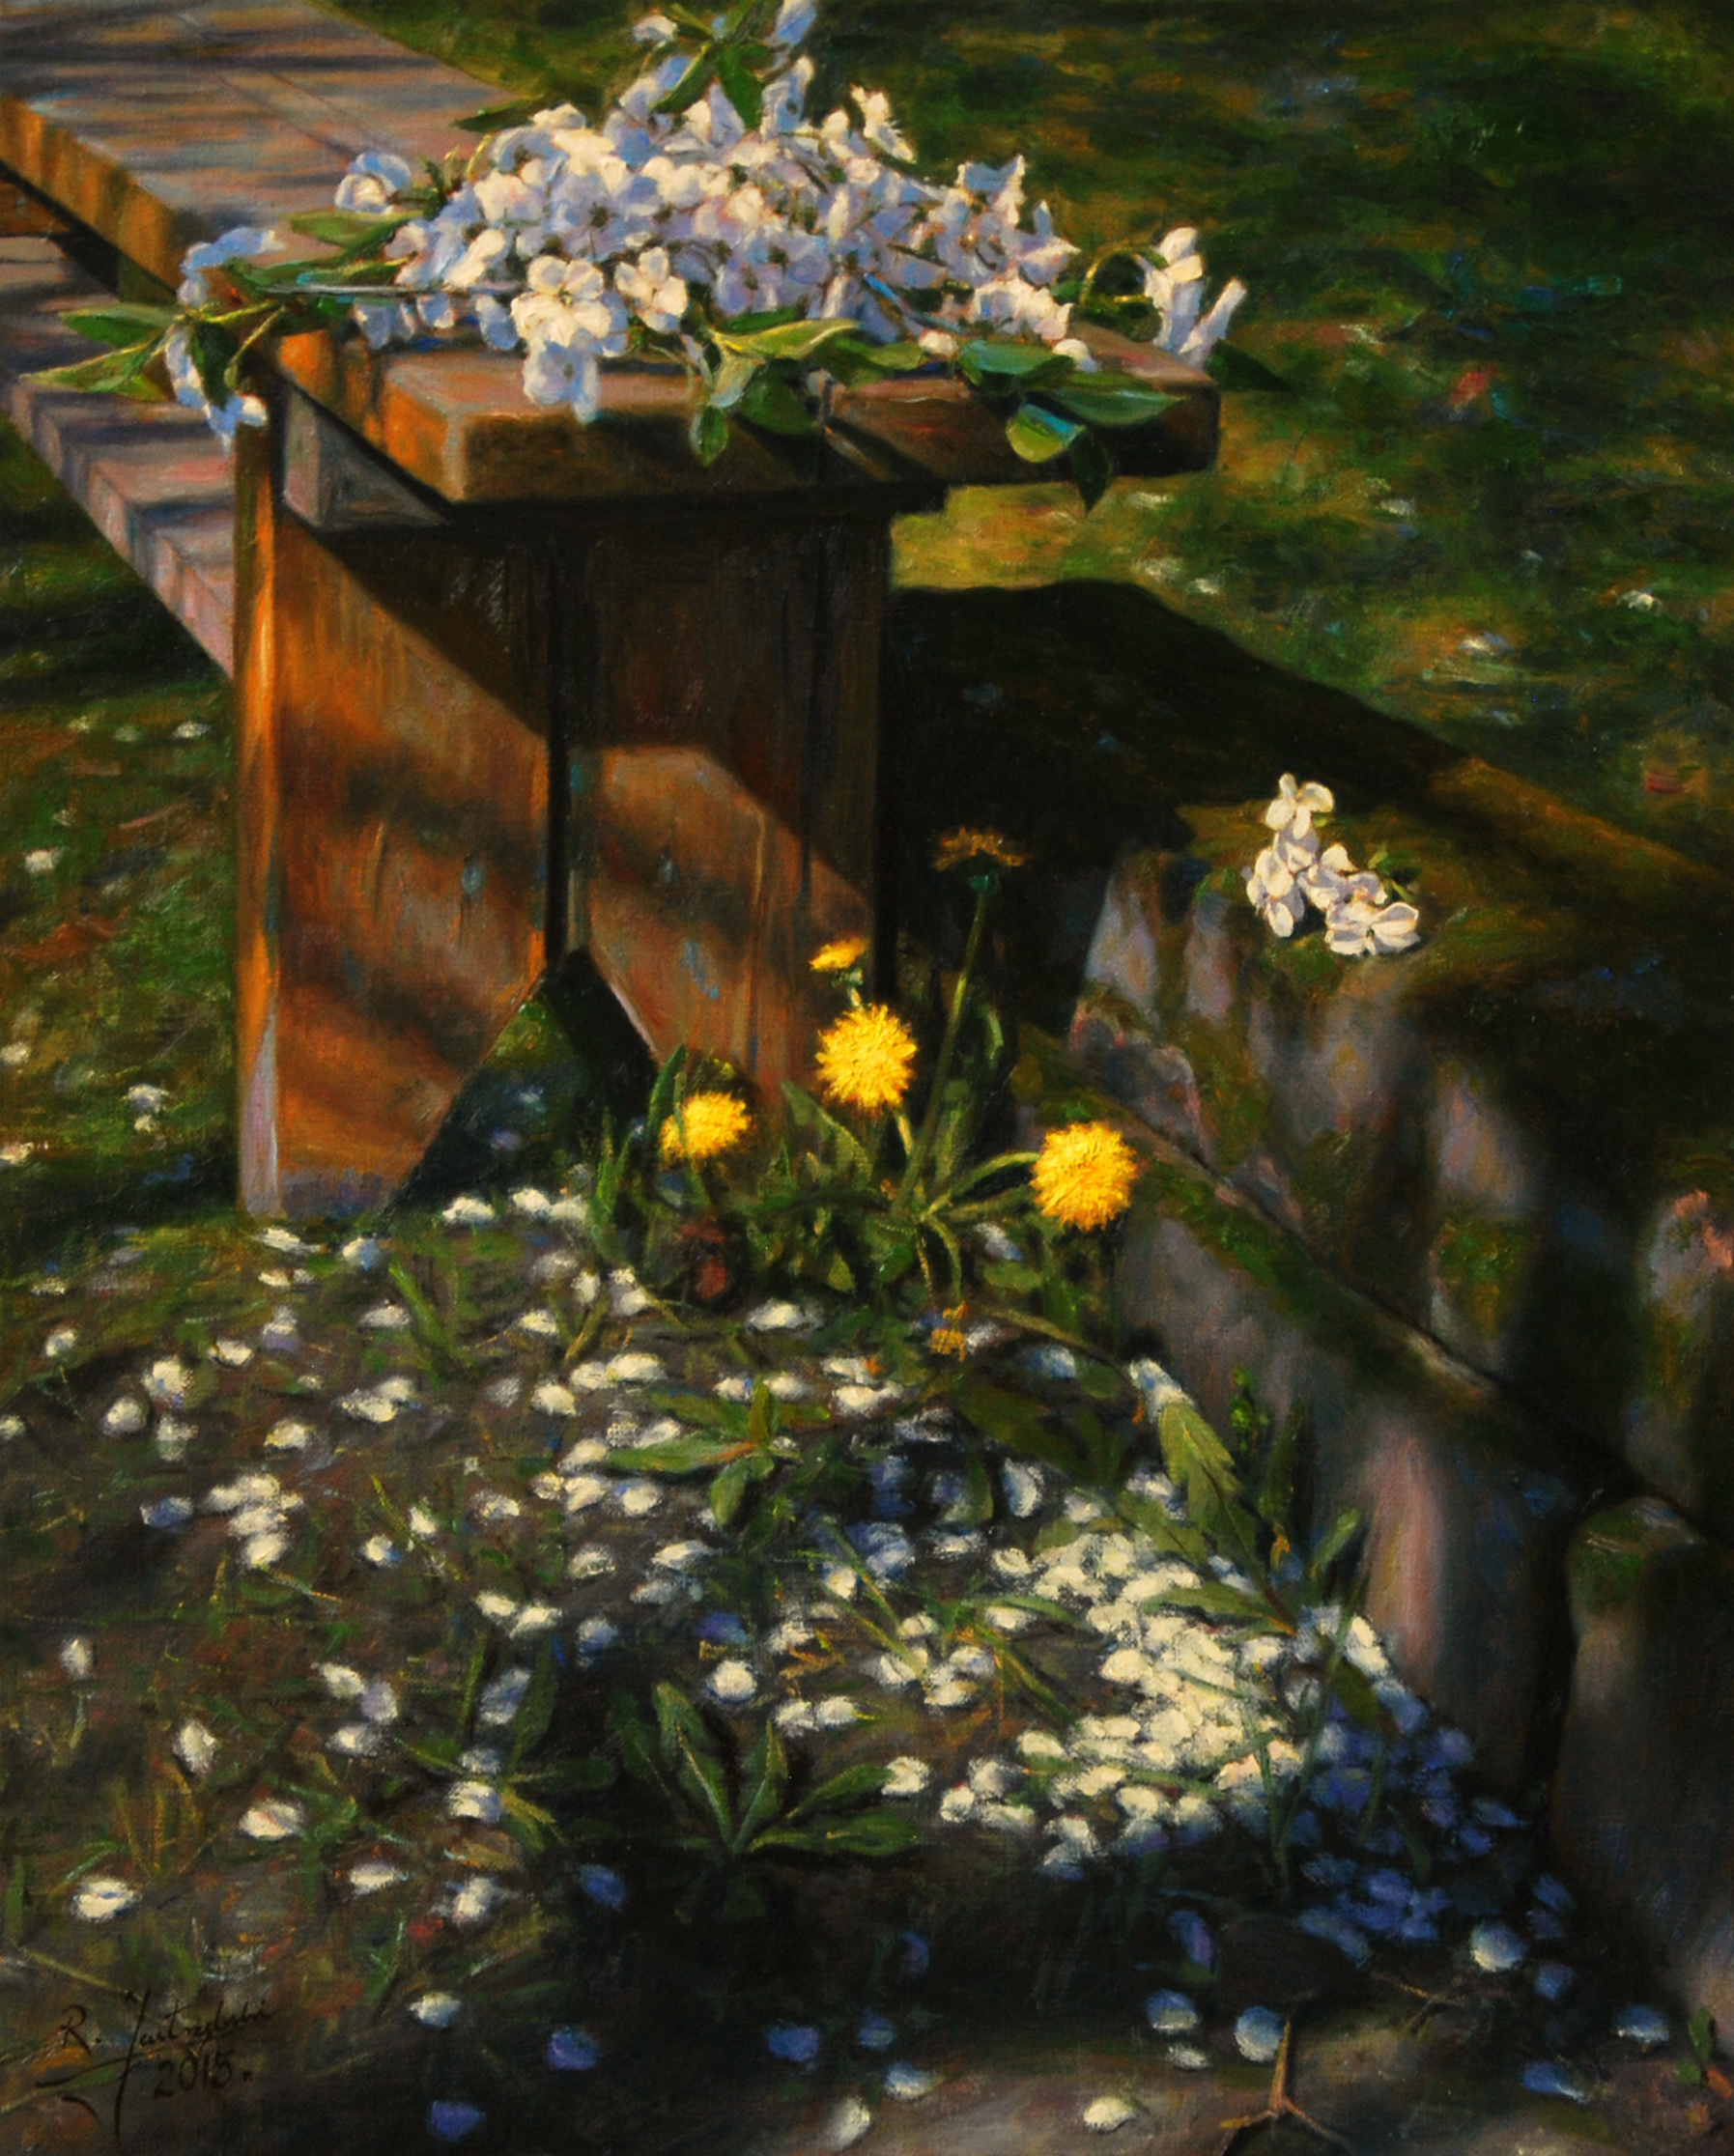 Cztery pory roku - wiosna, olej na płótnie, 50x40cm, 2015